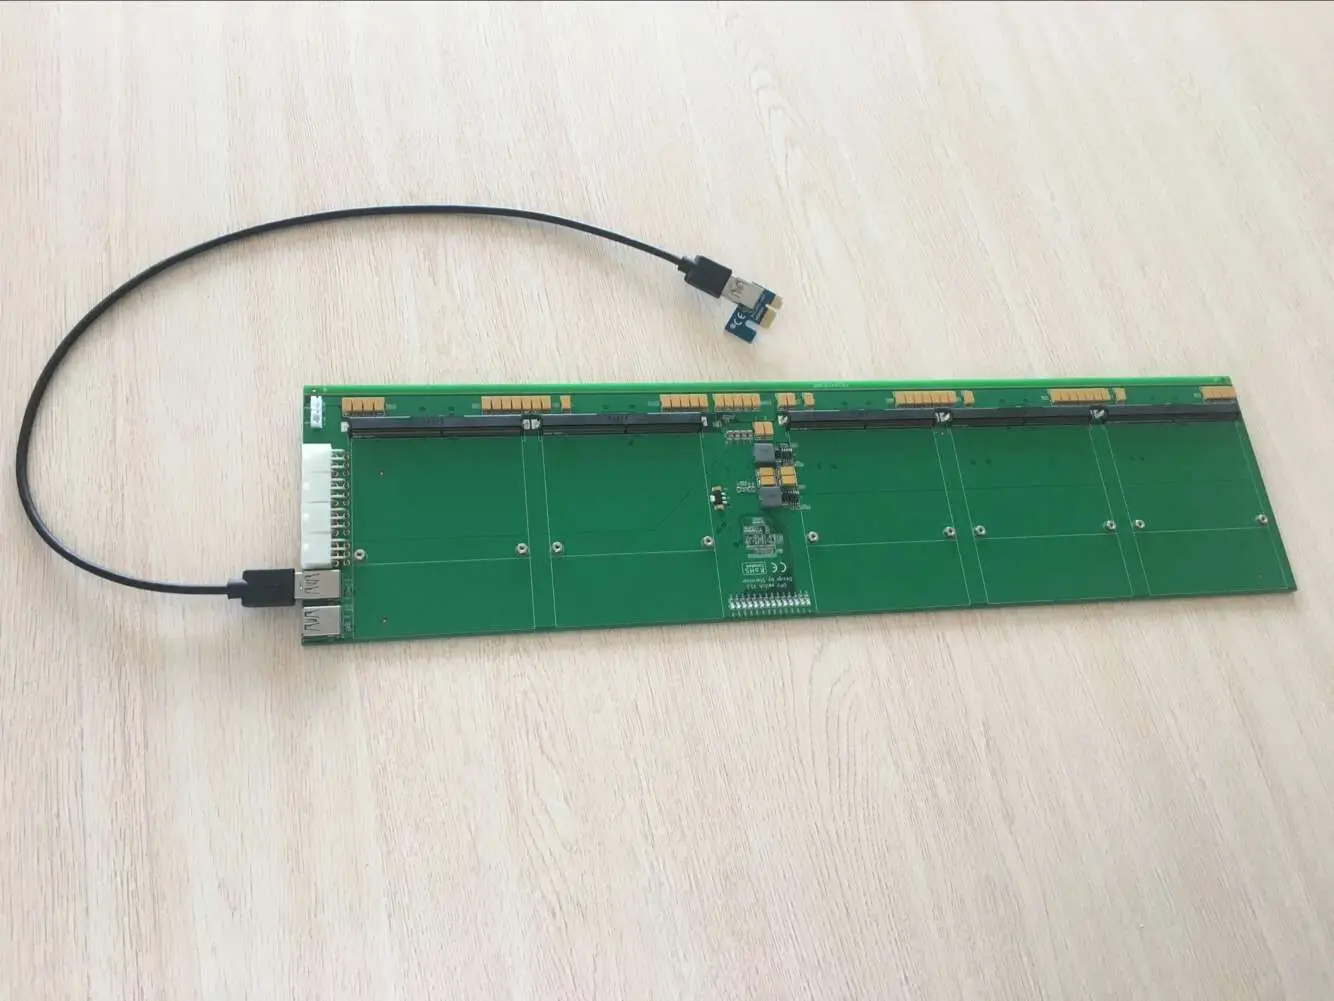 Мини PCI-E к MXM3.0 Riser Card видеокарта расширения карта 10-port MXM3.0 USB 3,0 6Pin источник питания для майнинга BTC